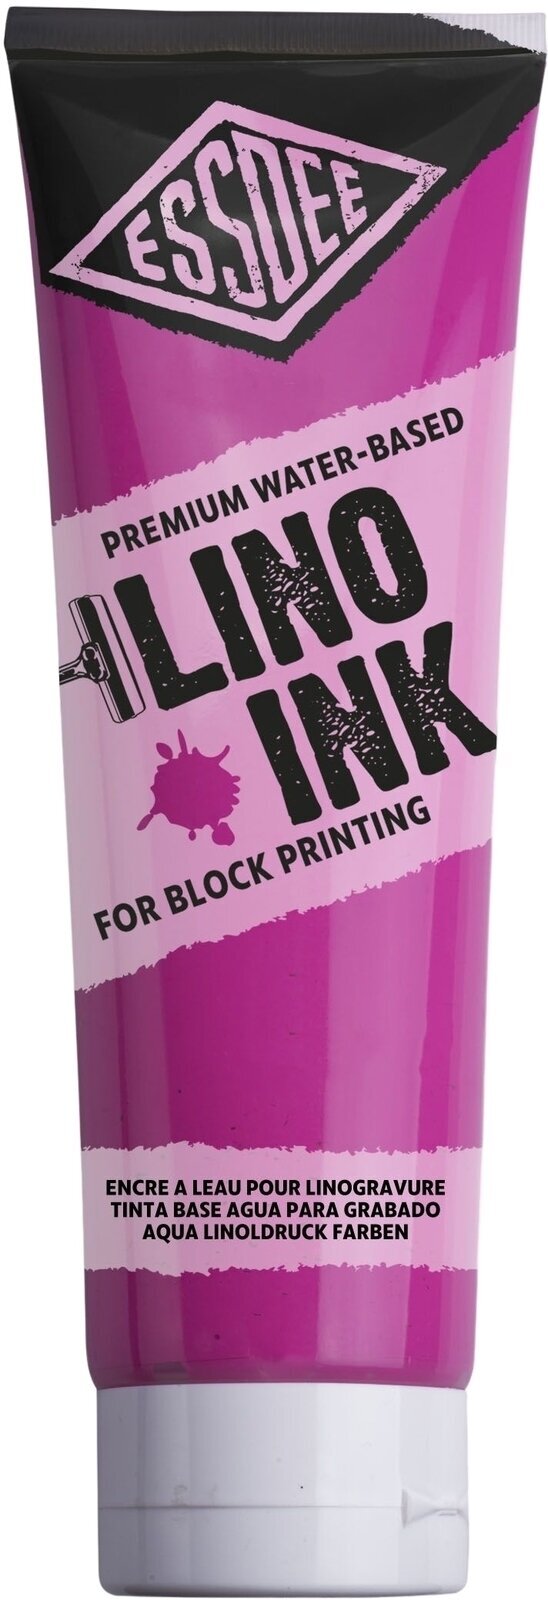 Peintures pour la linogravure Essdee Block Printing Ink Peintures pour la linogravure Fluorescent Pink 300 ml